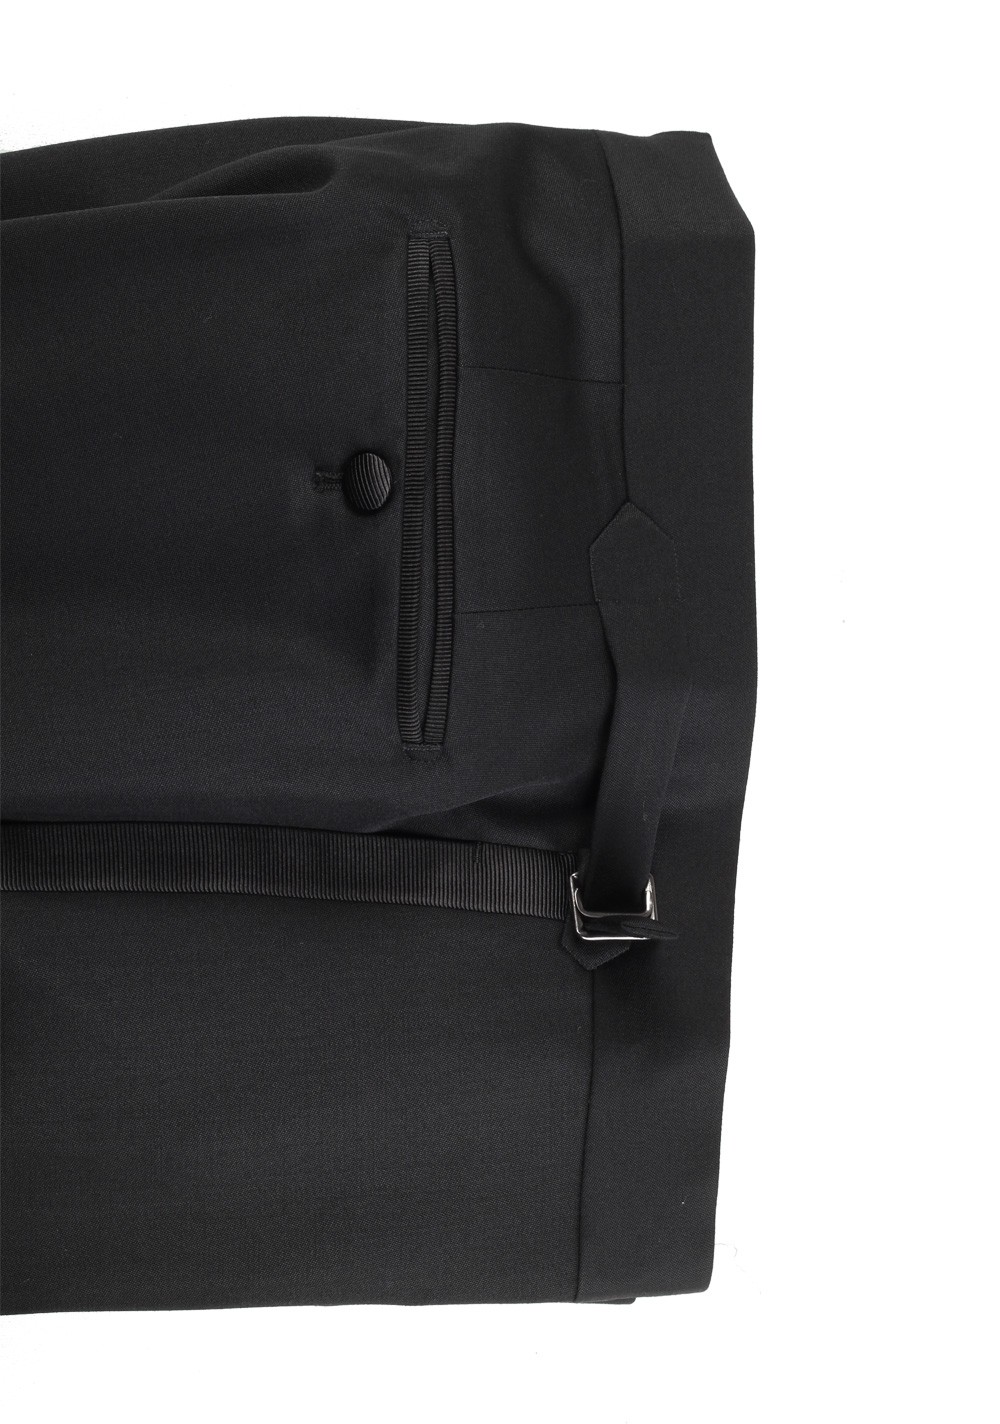 TOM FORD Windsor Black Tuxedo Suit Smoking Size 48C / 38S U.S. Fit A | Costume Limité